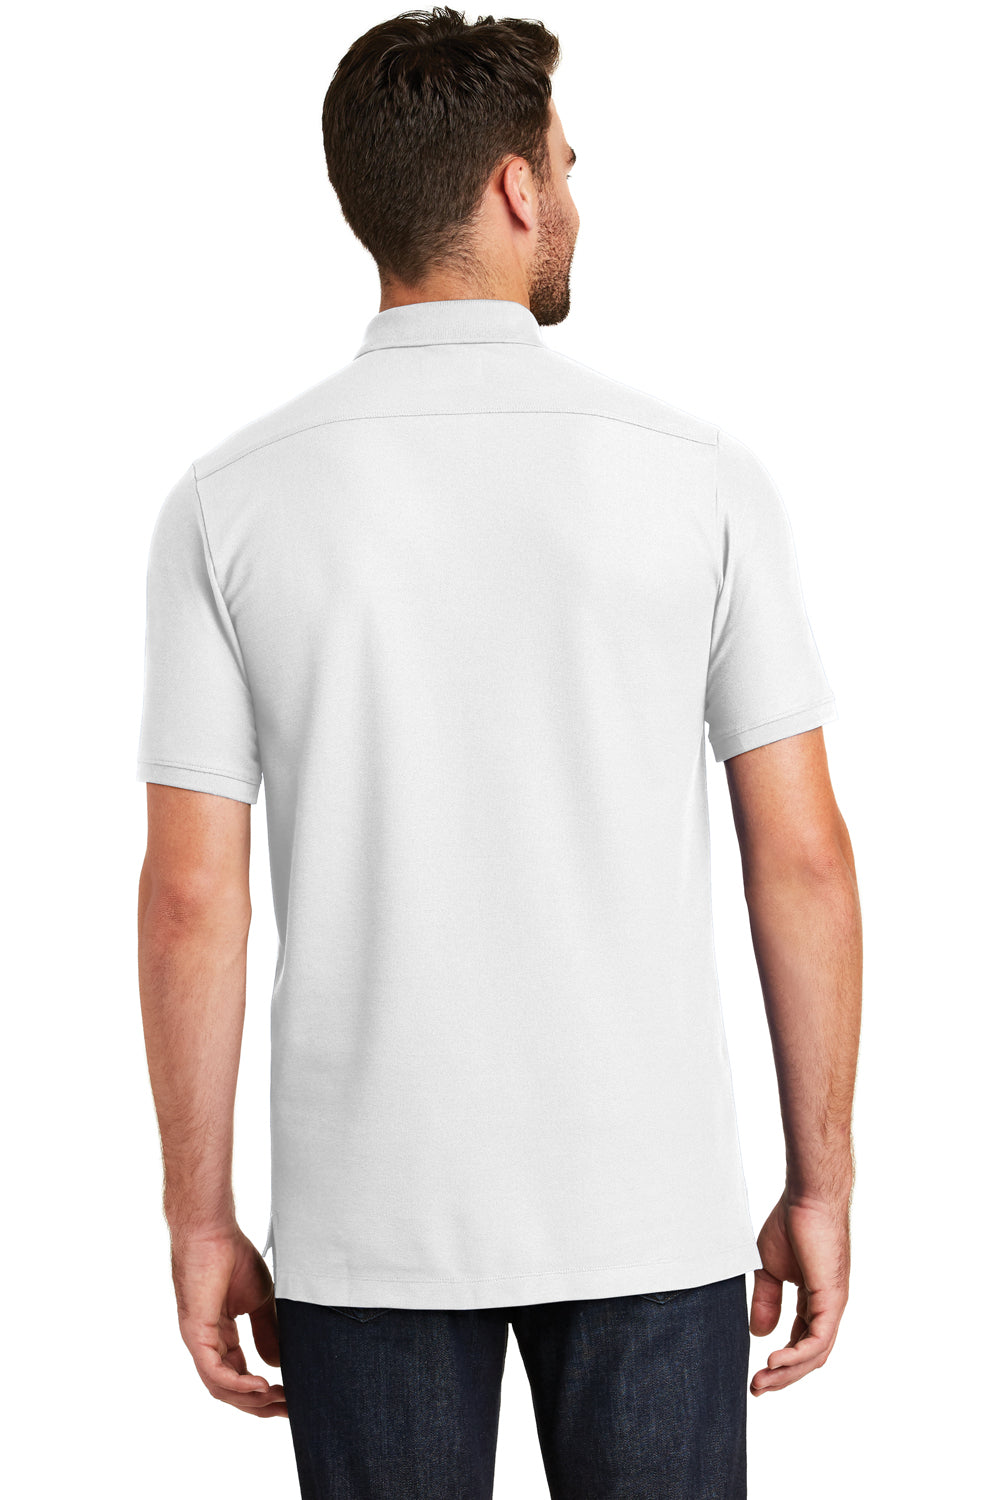 New Era NEA300 Mens Venue Home Plate Moisture Wicking Short Sleeve Polo Shirt White Back